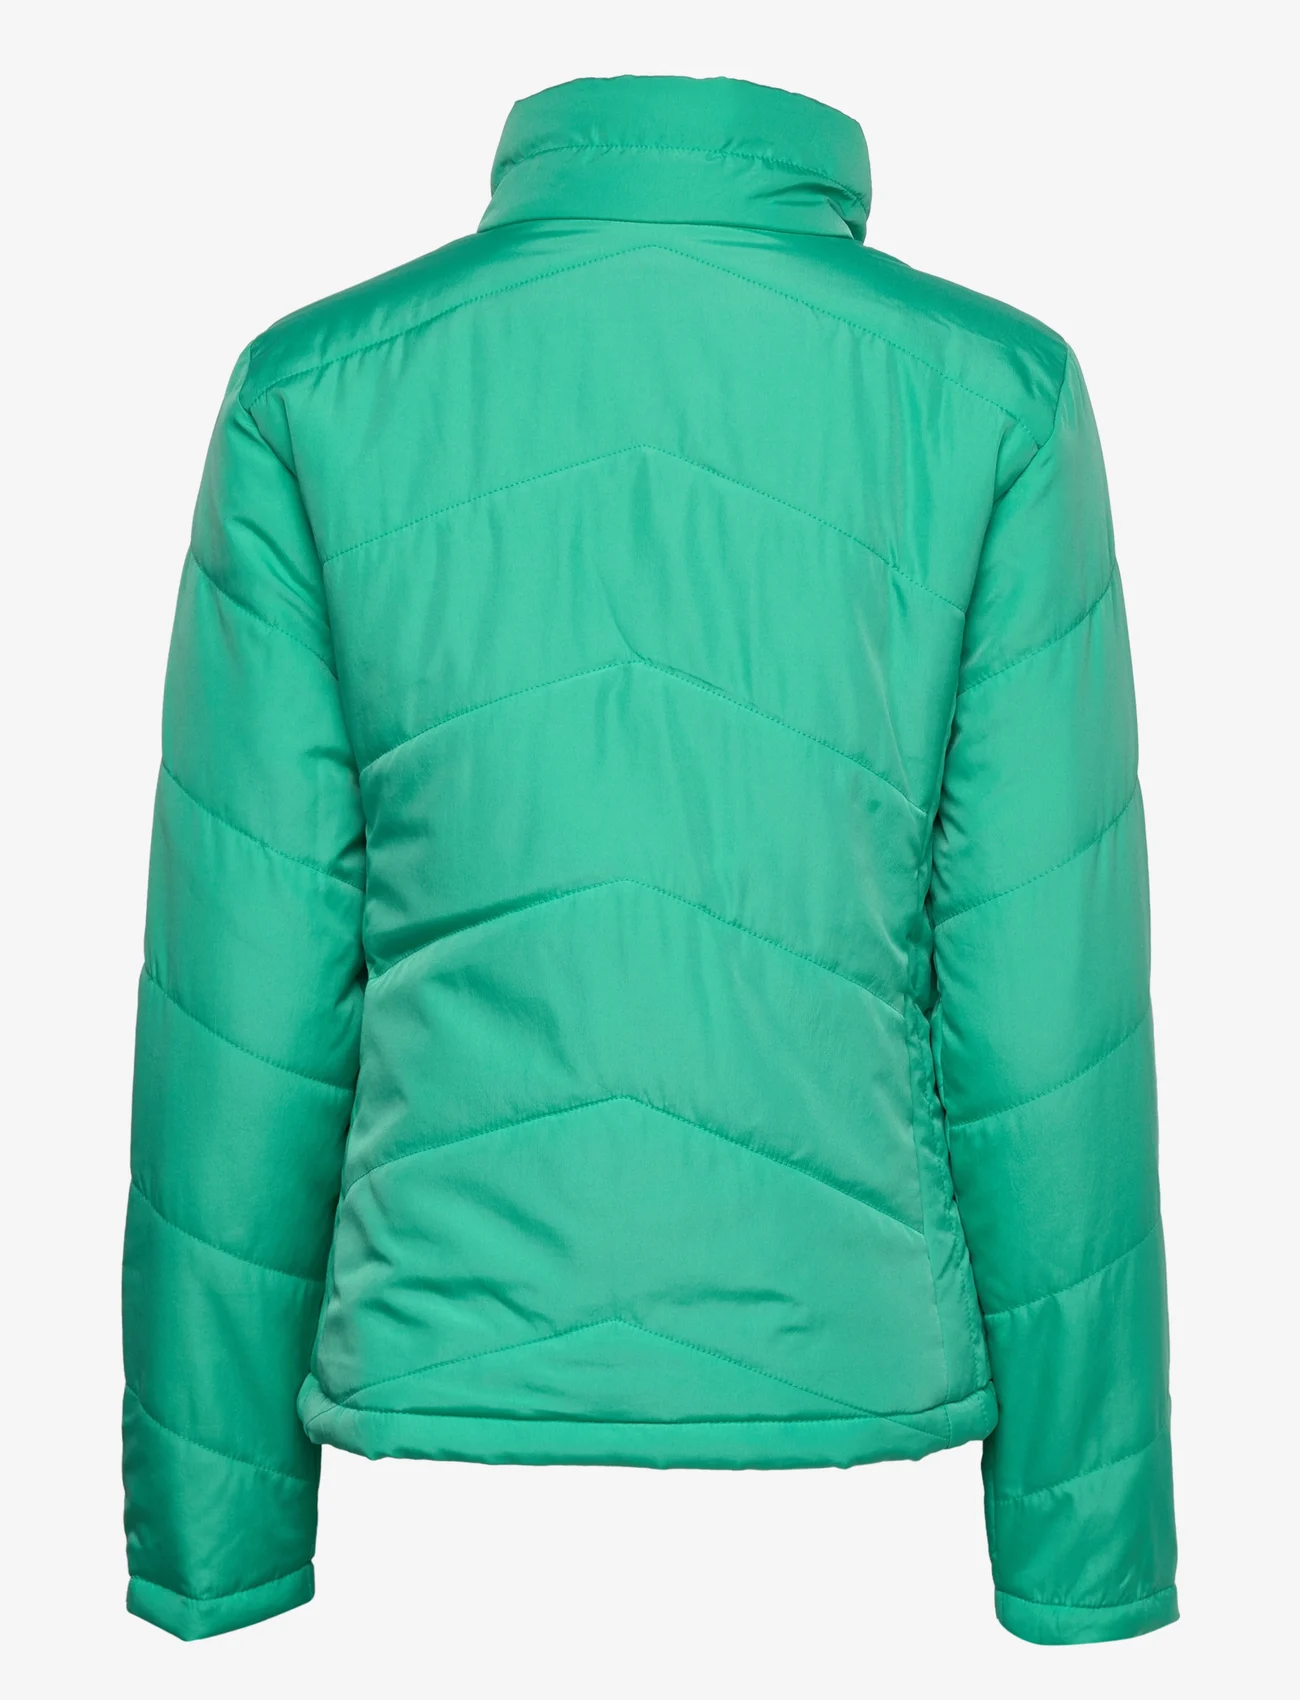 ONLY - ONLNICOLE QUILT JACKET OTW - spring jackets - marine green - 1